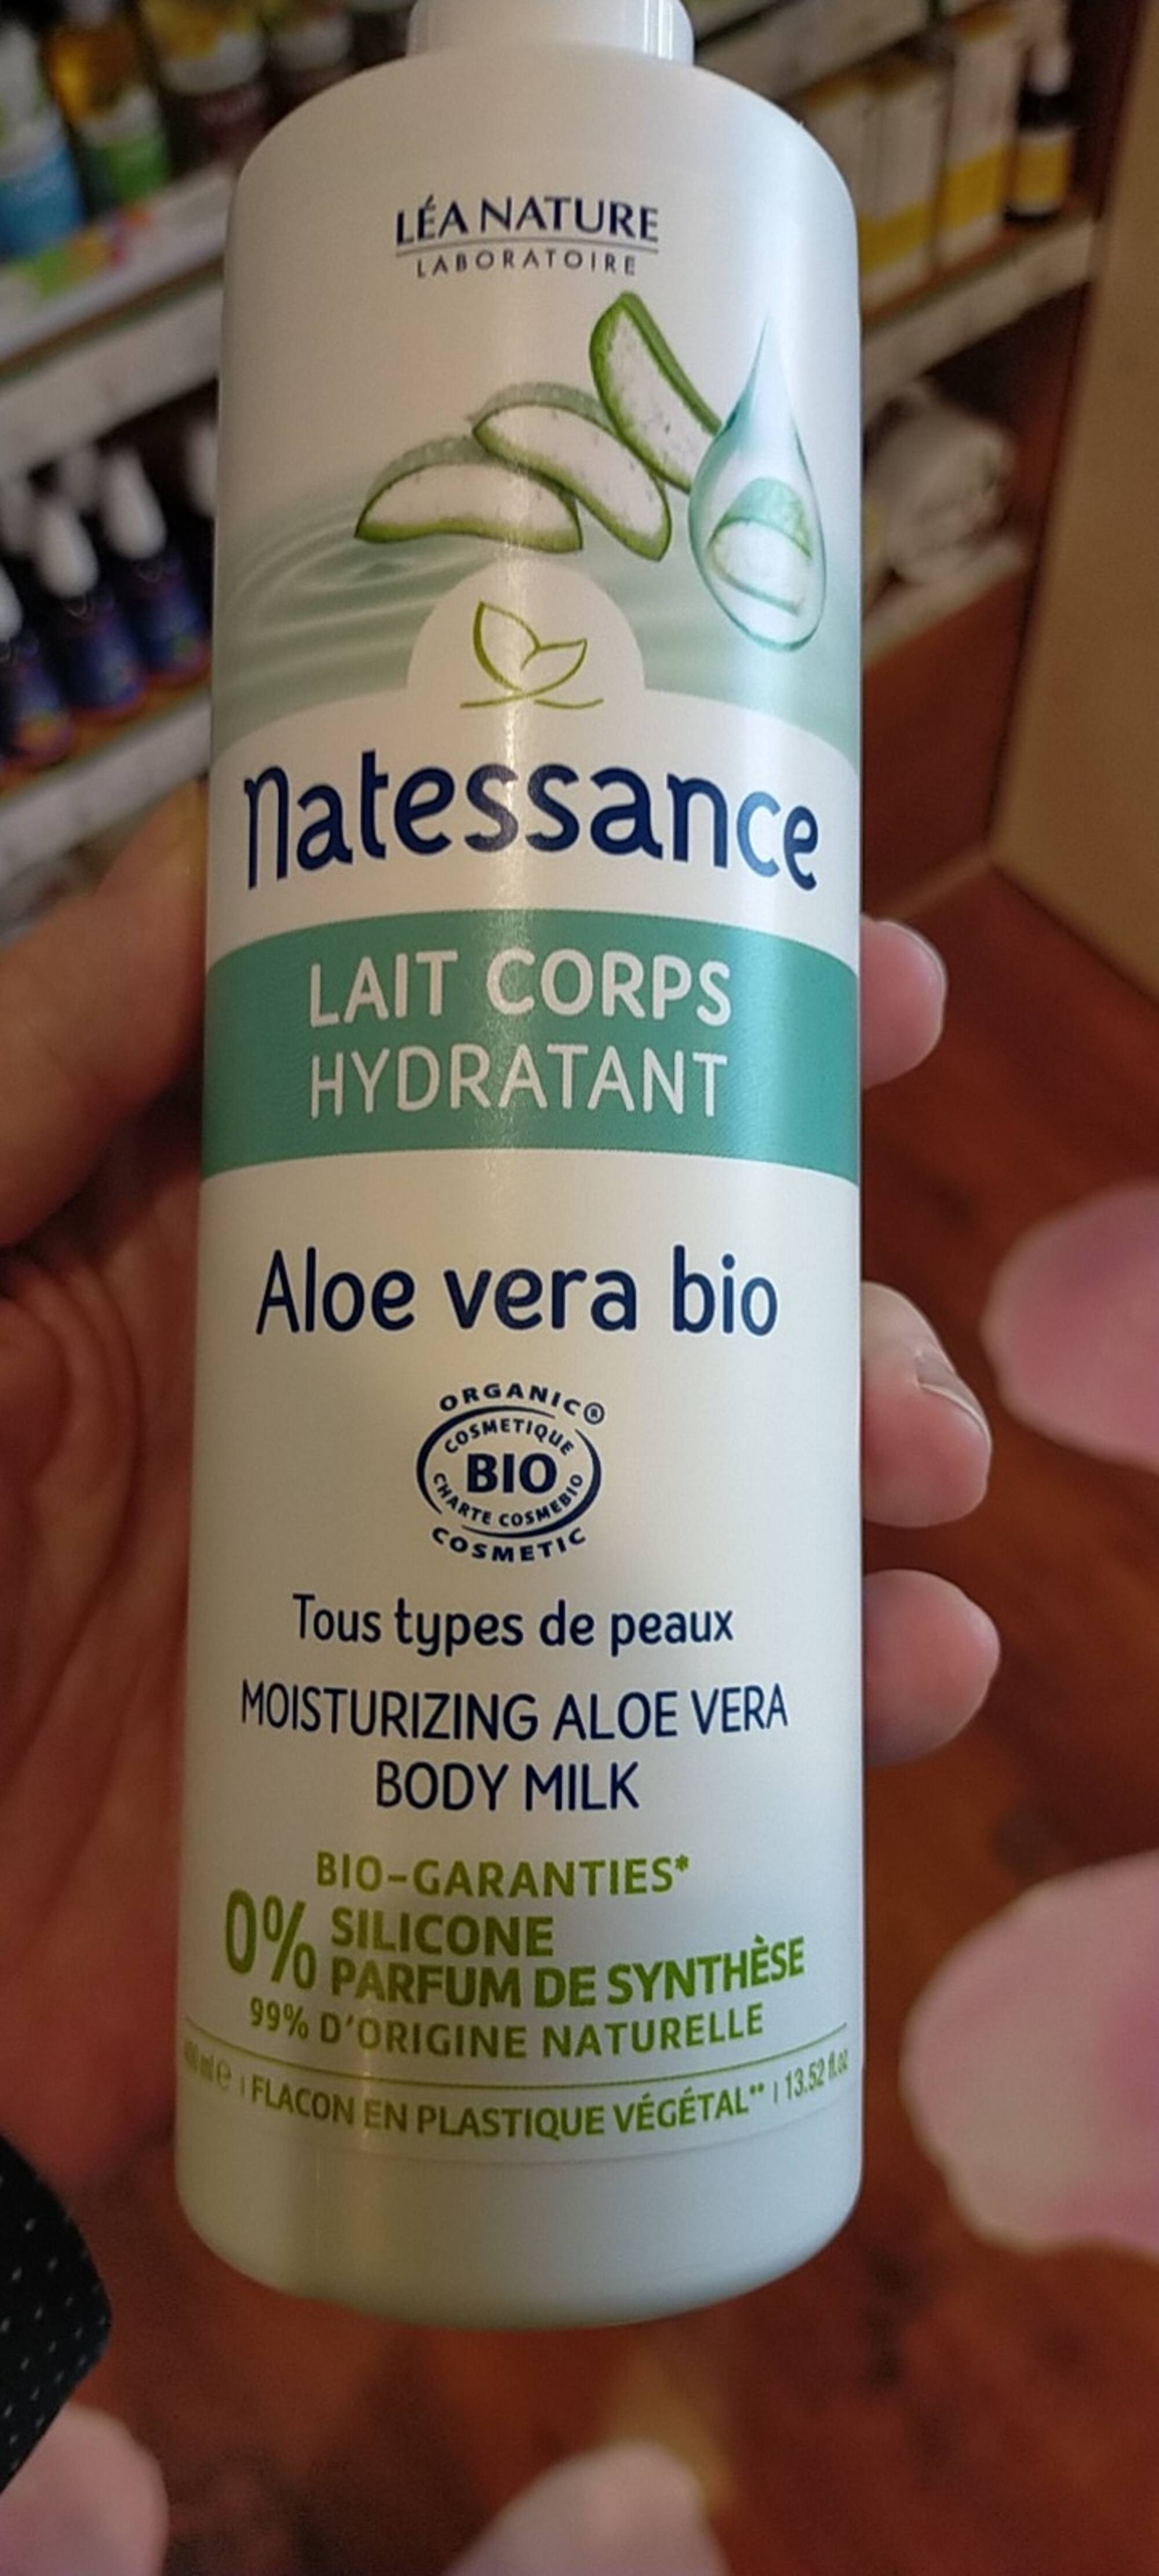 NATESSANCE - Aloe vera bio - Lait corps hydratant